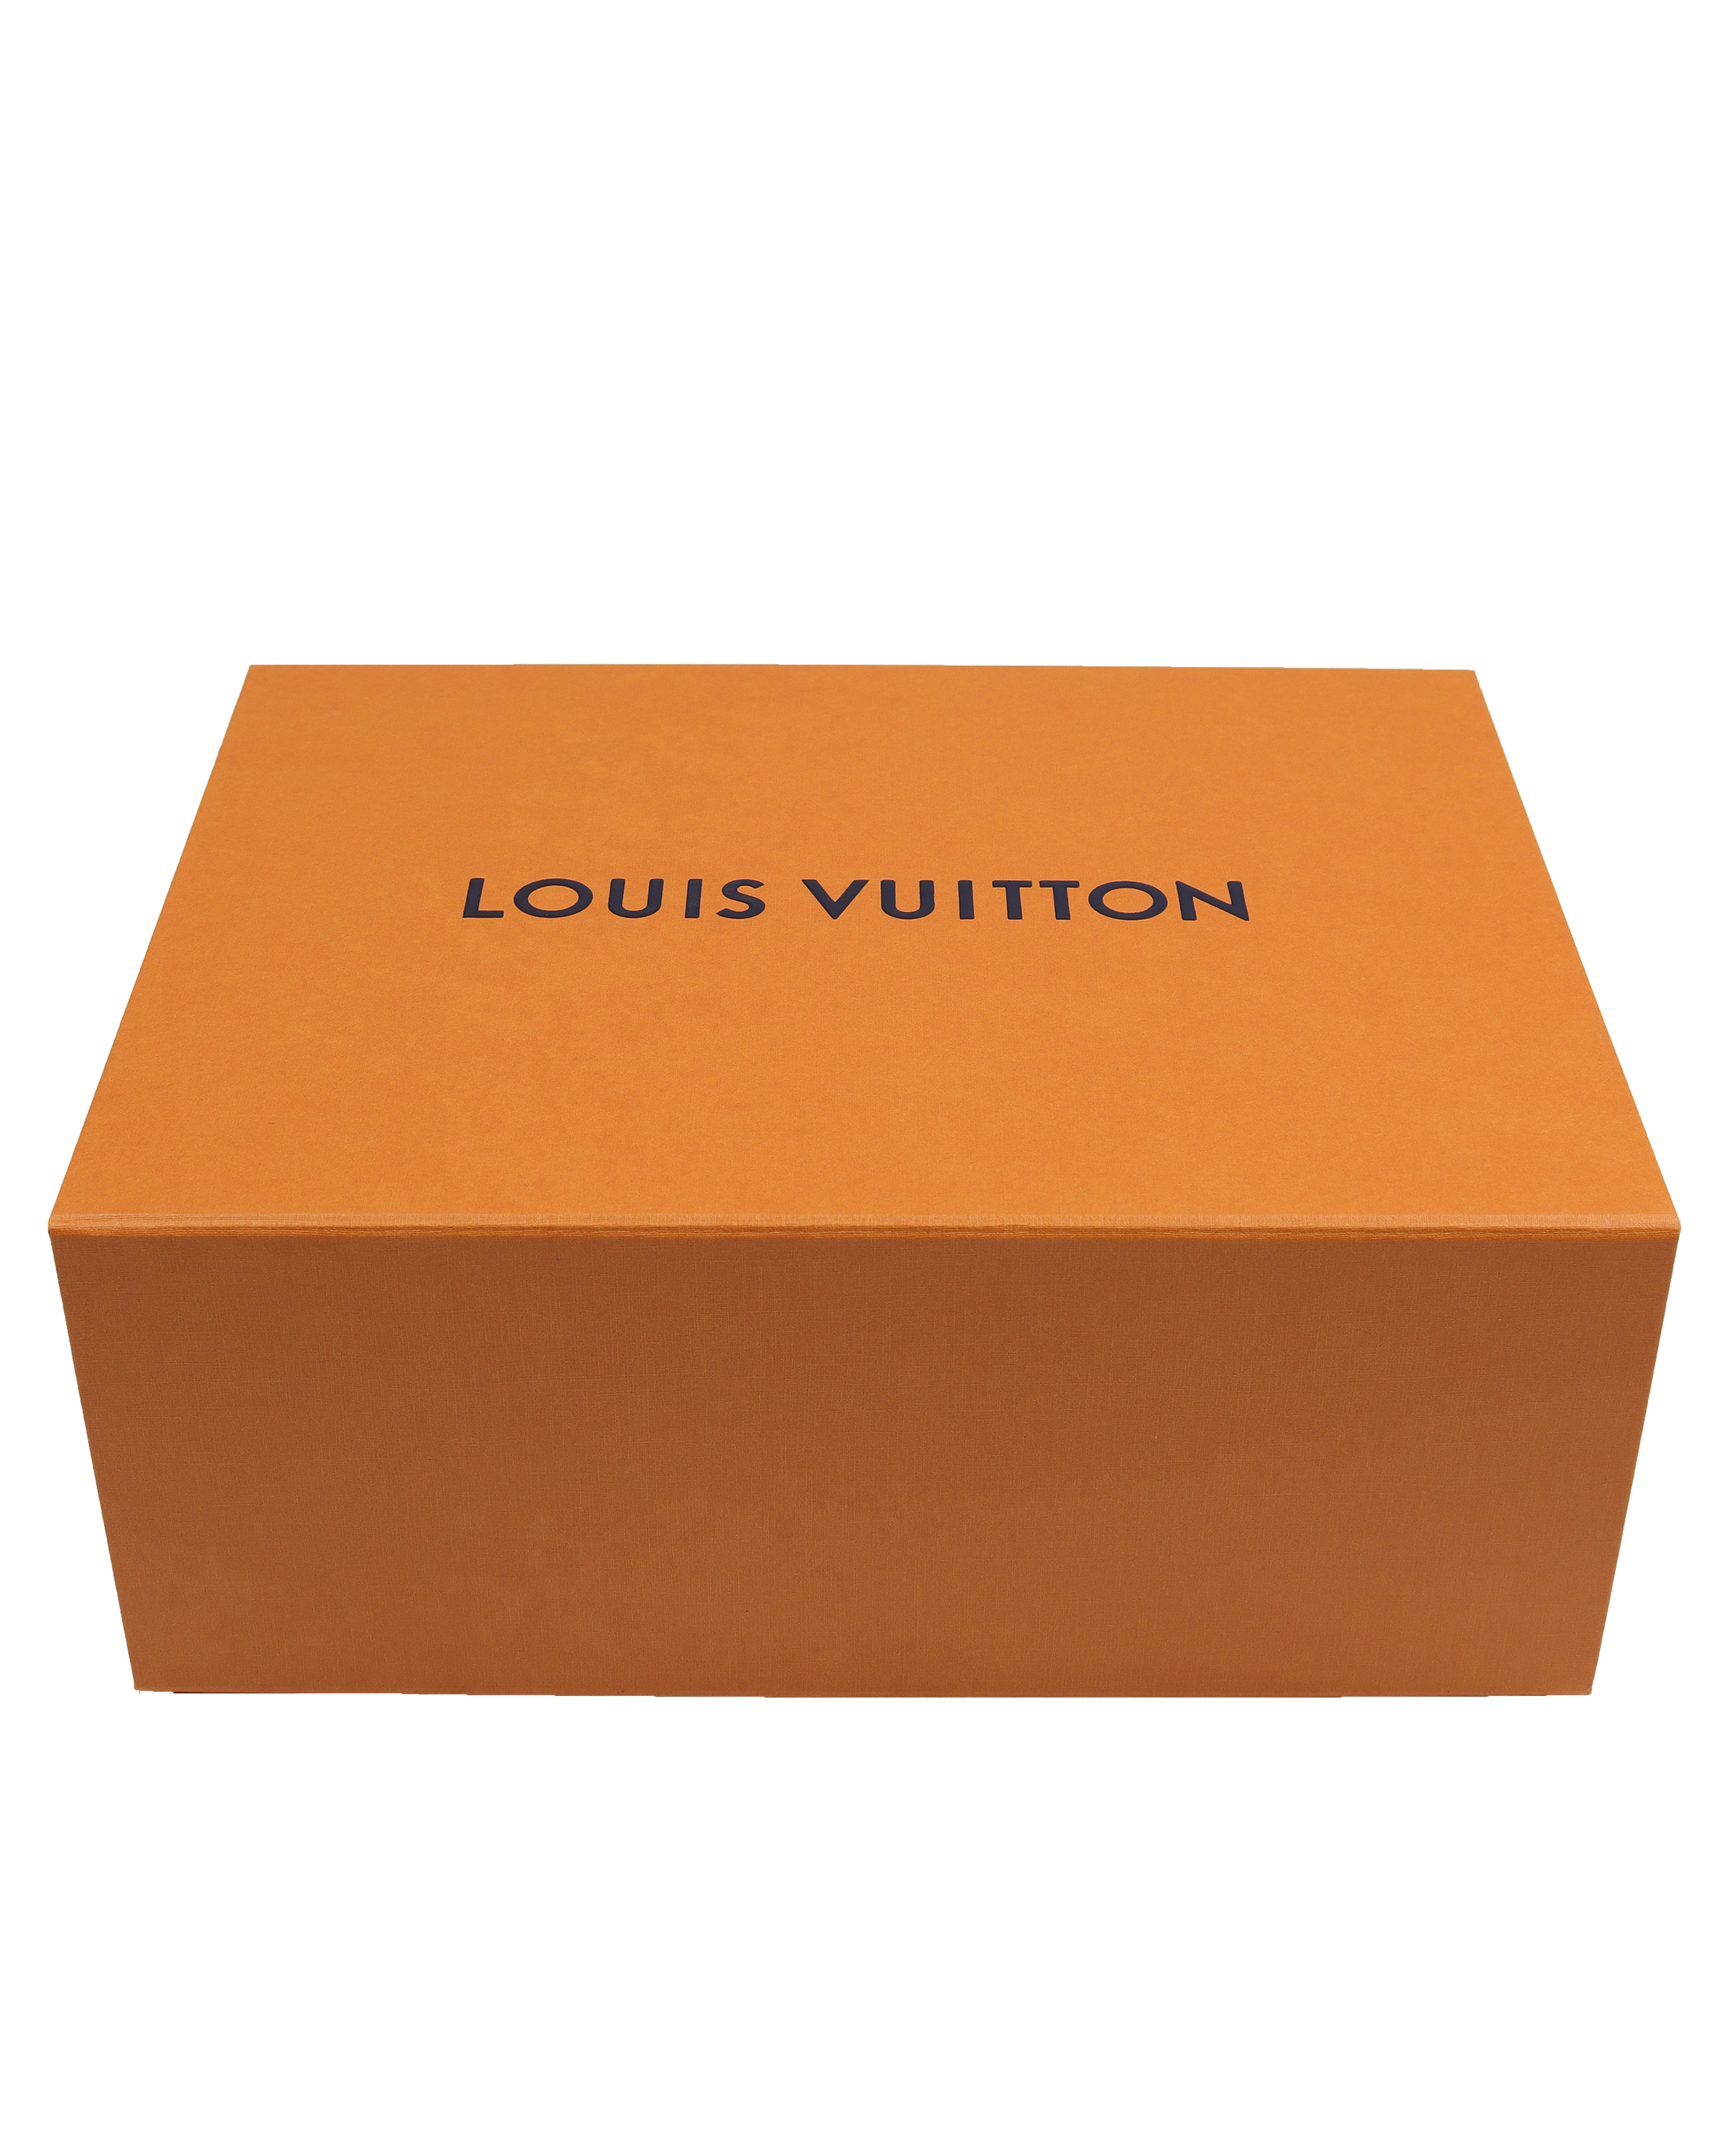 Louis Vuitton SoHo Pop-Up - DuJour